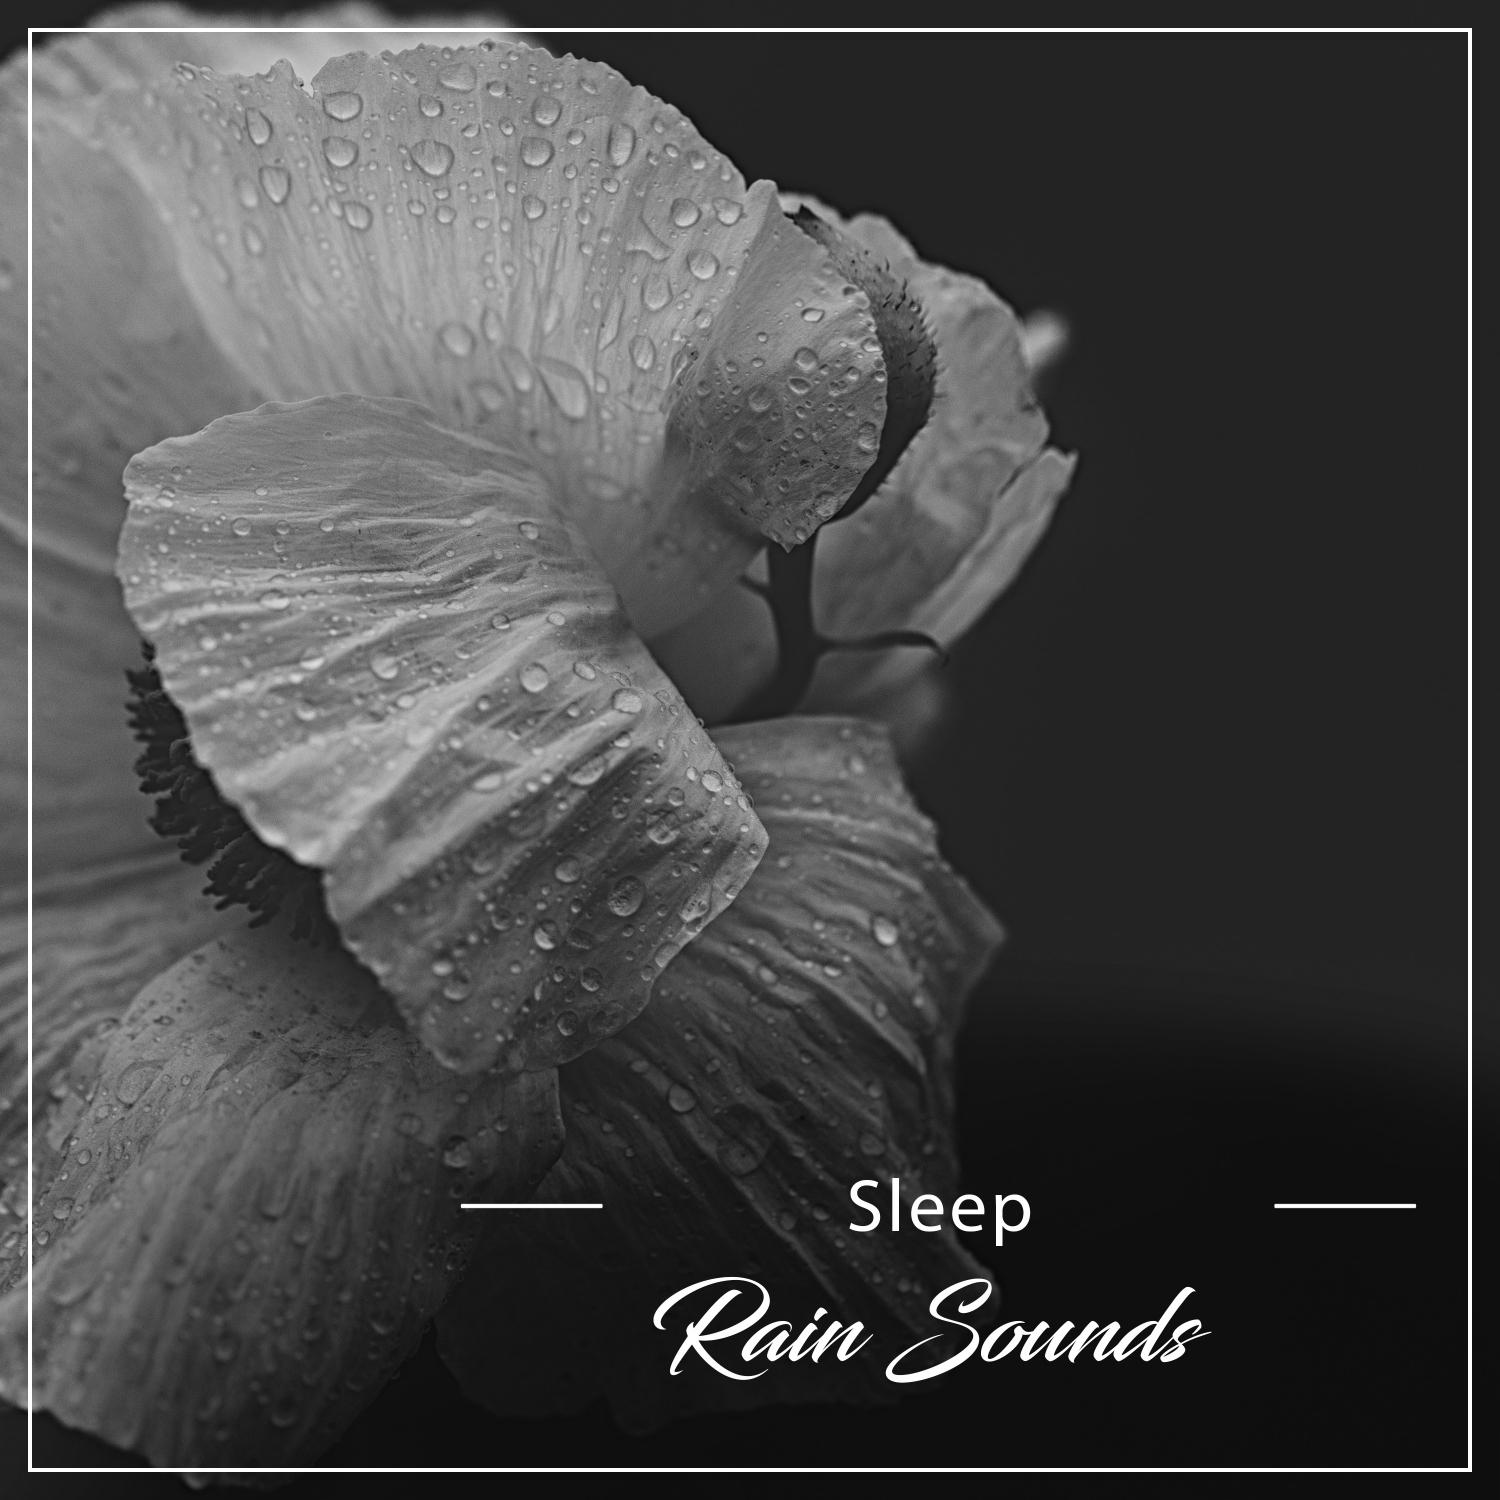 19 Sleep Rain Sounds - Cure Insomnia, Natural Sleep, Deep Sleep, Wake Refreshed